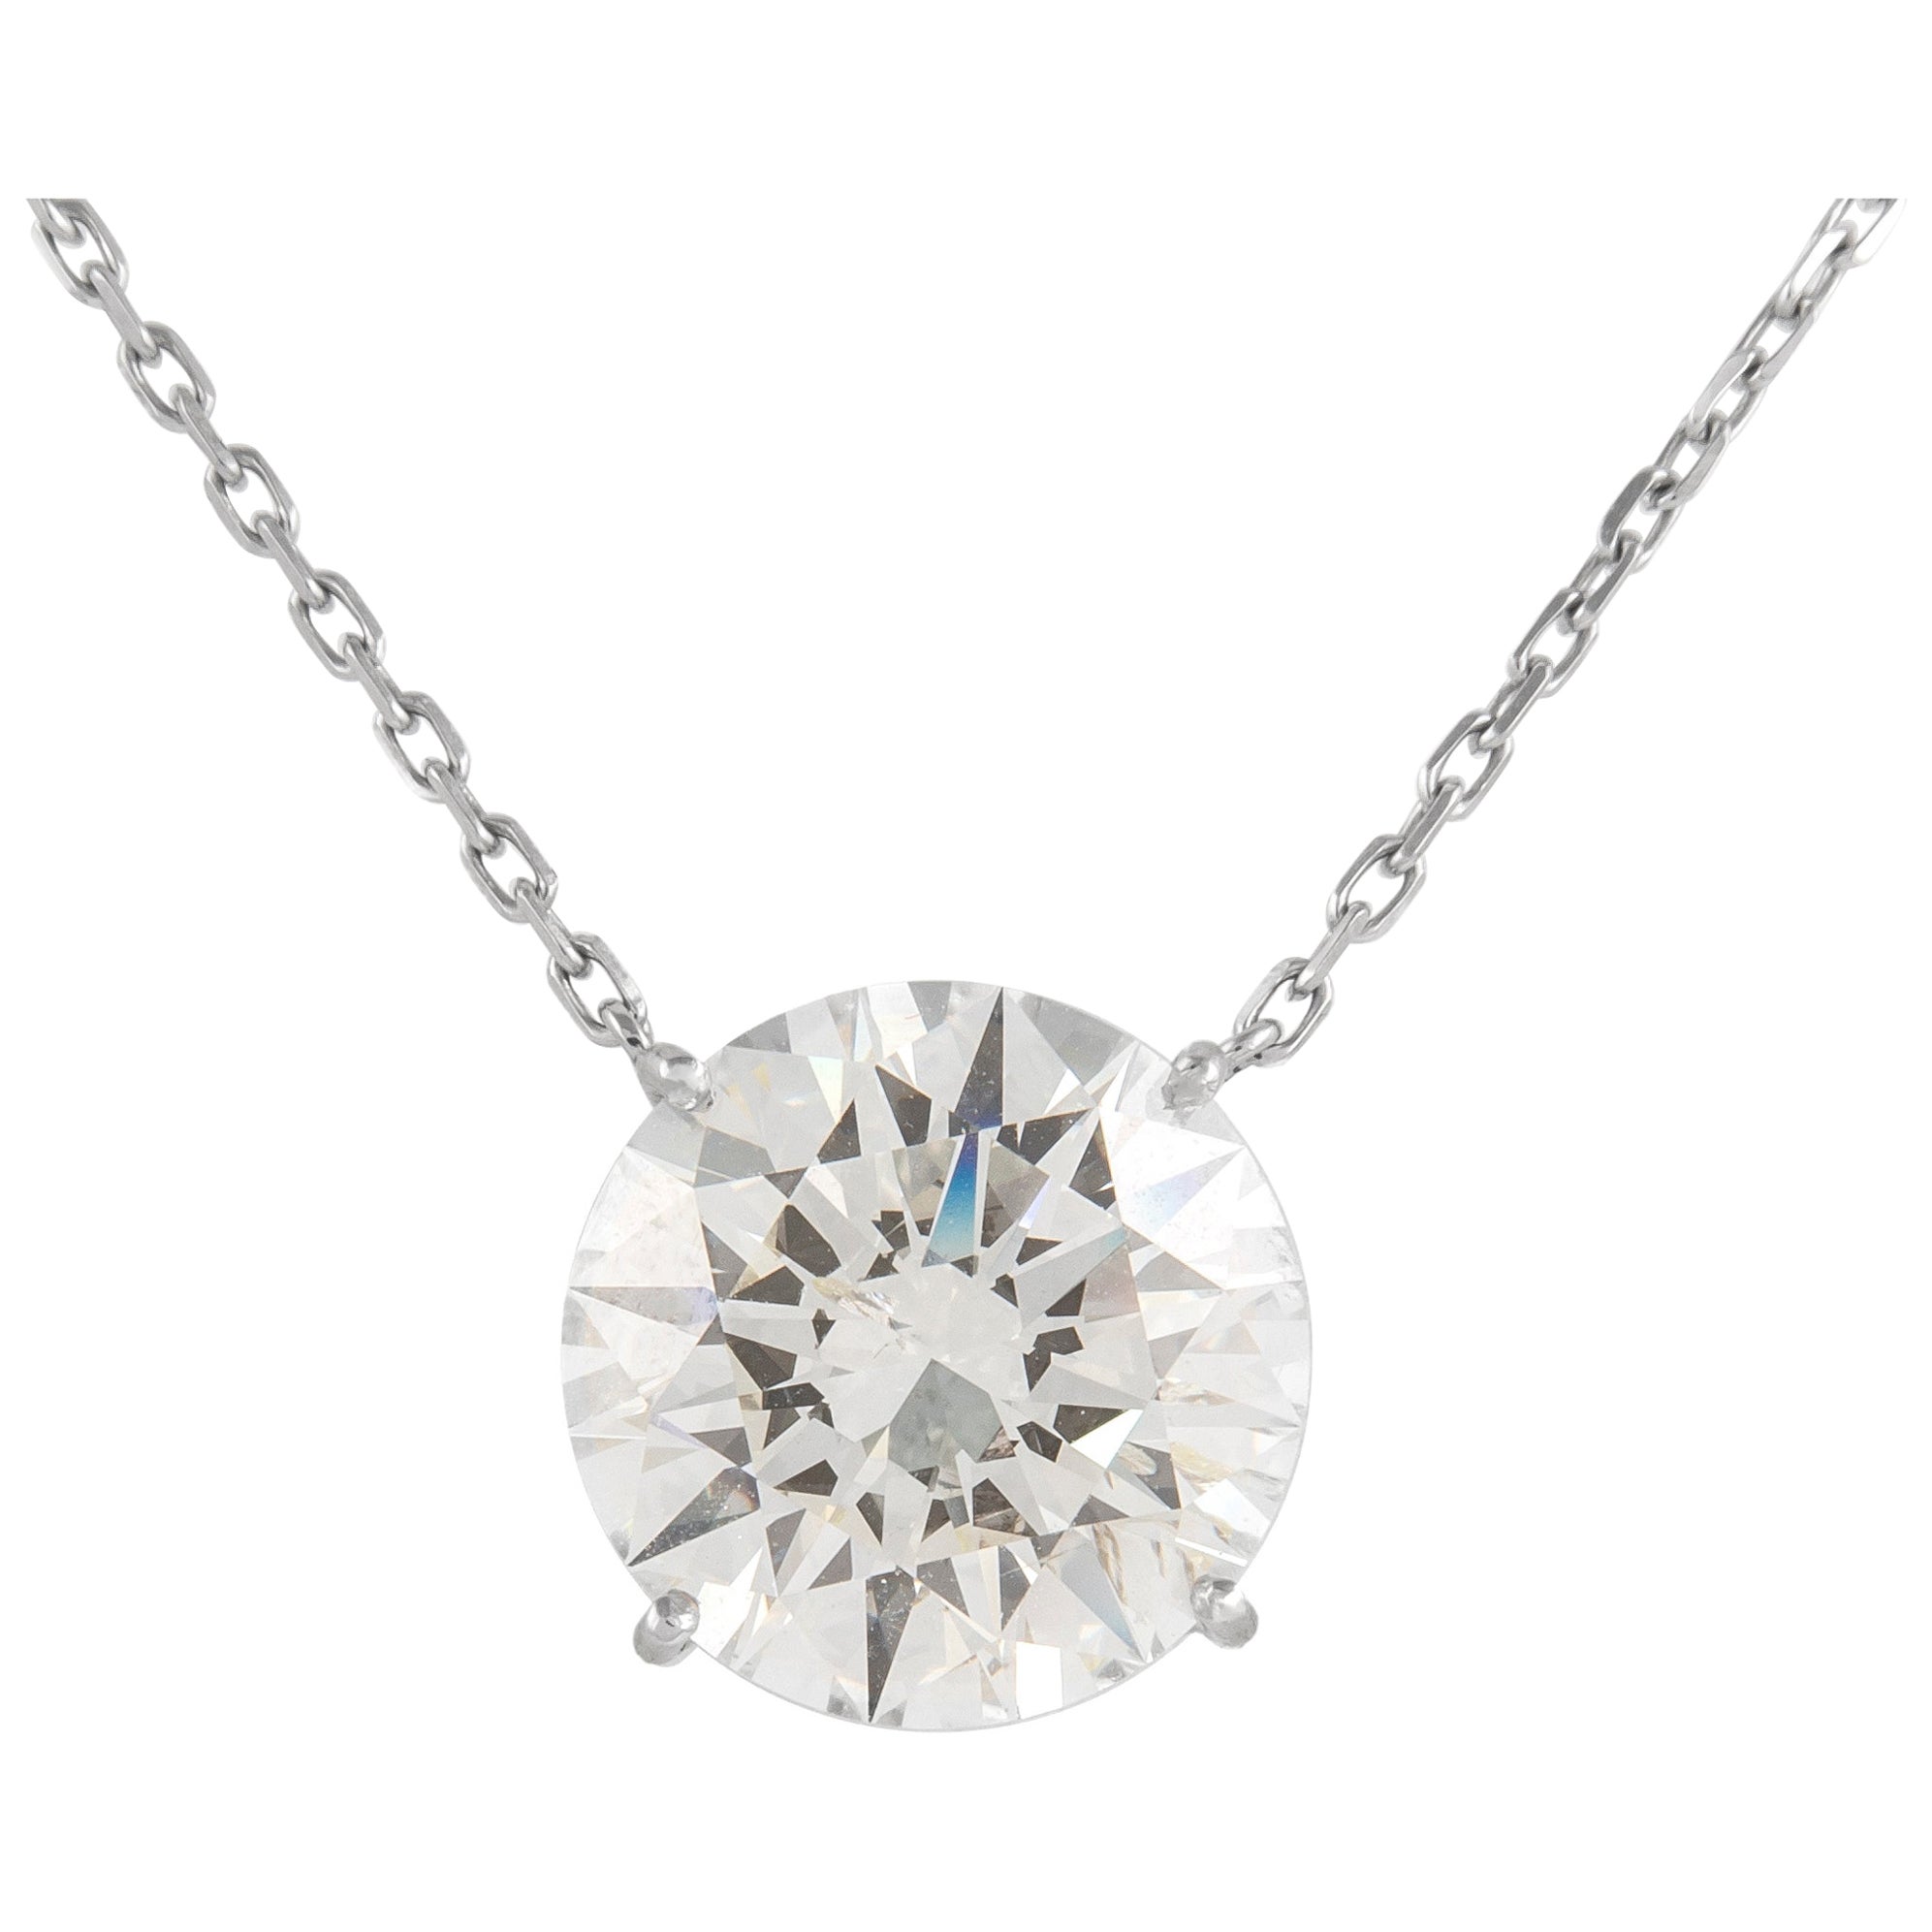 Alexander 8.43 Carats Diamond Solitaire Pendant Necklace 18k White Gold